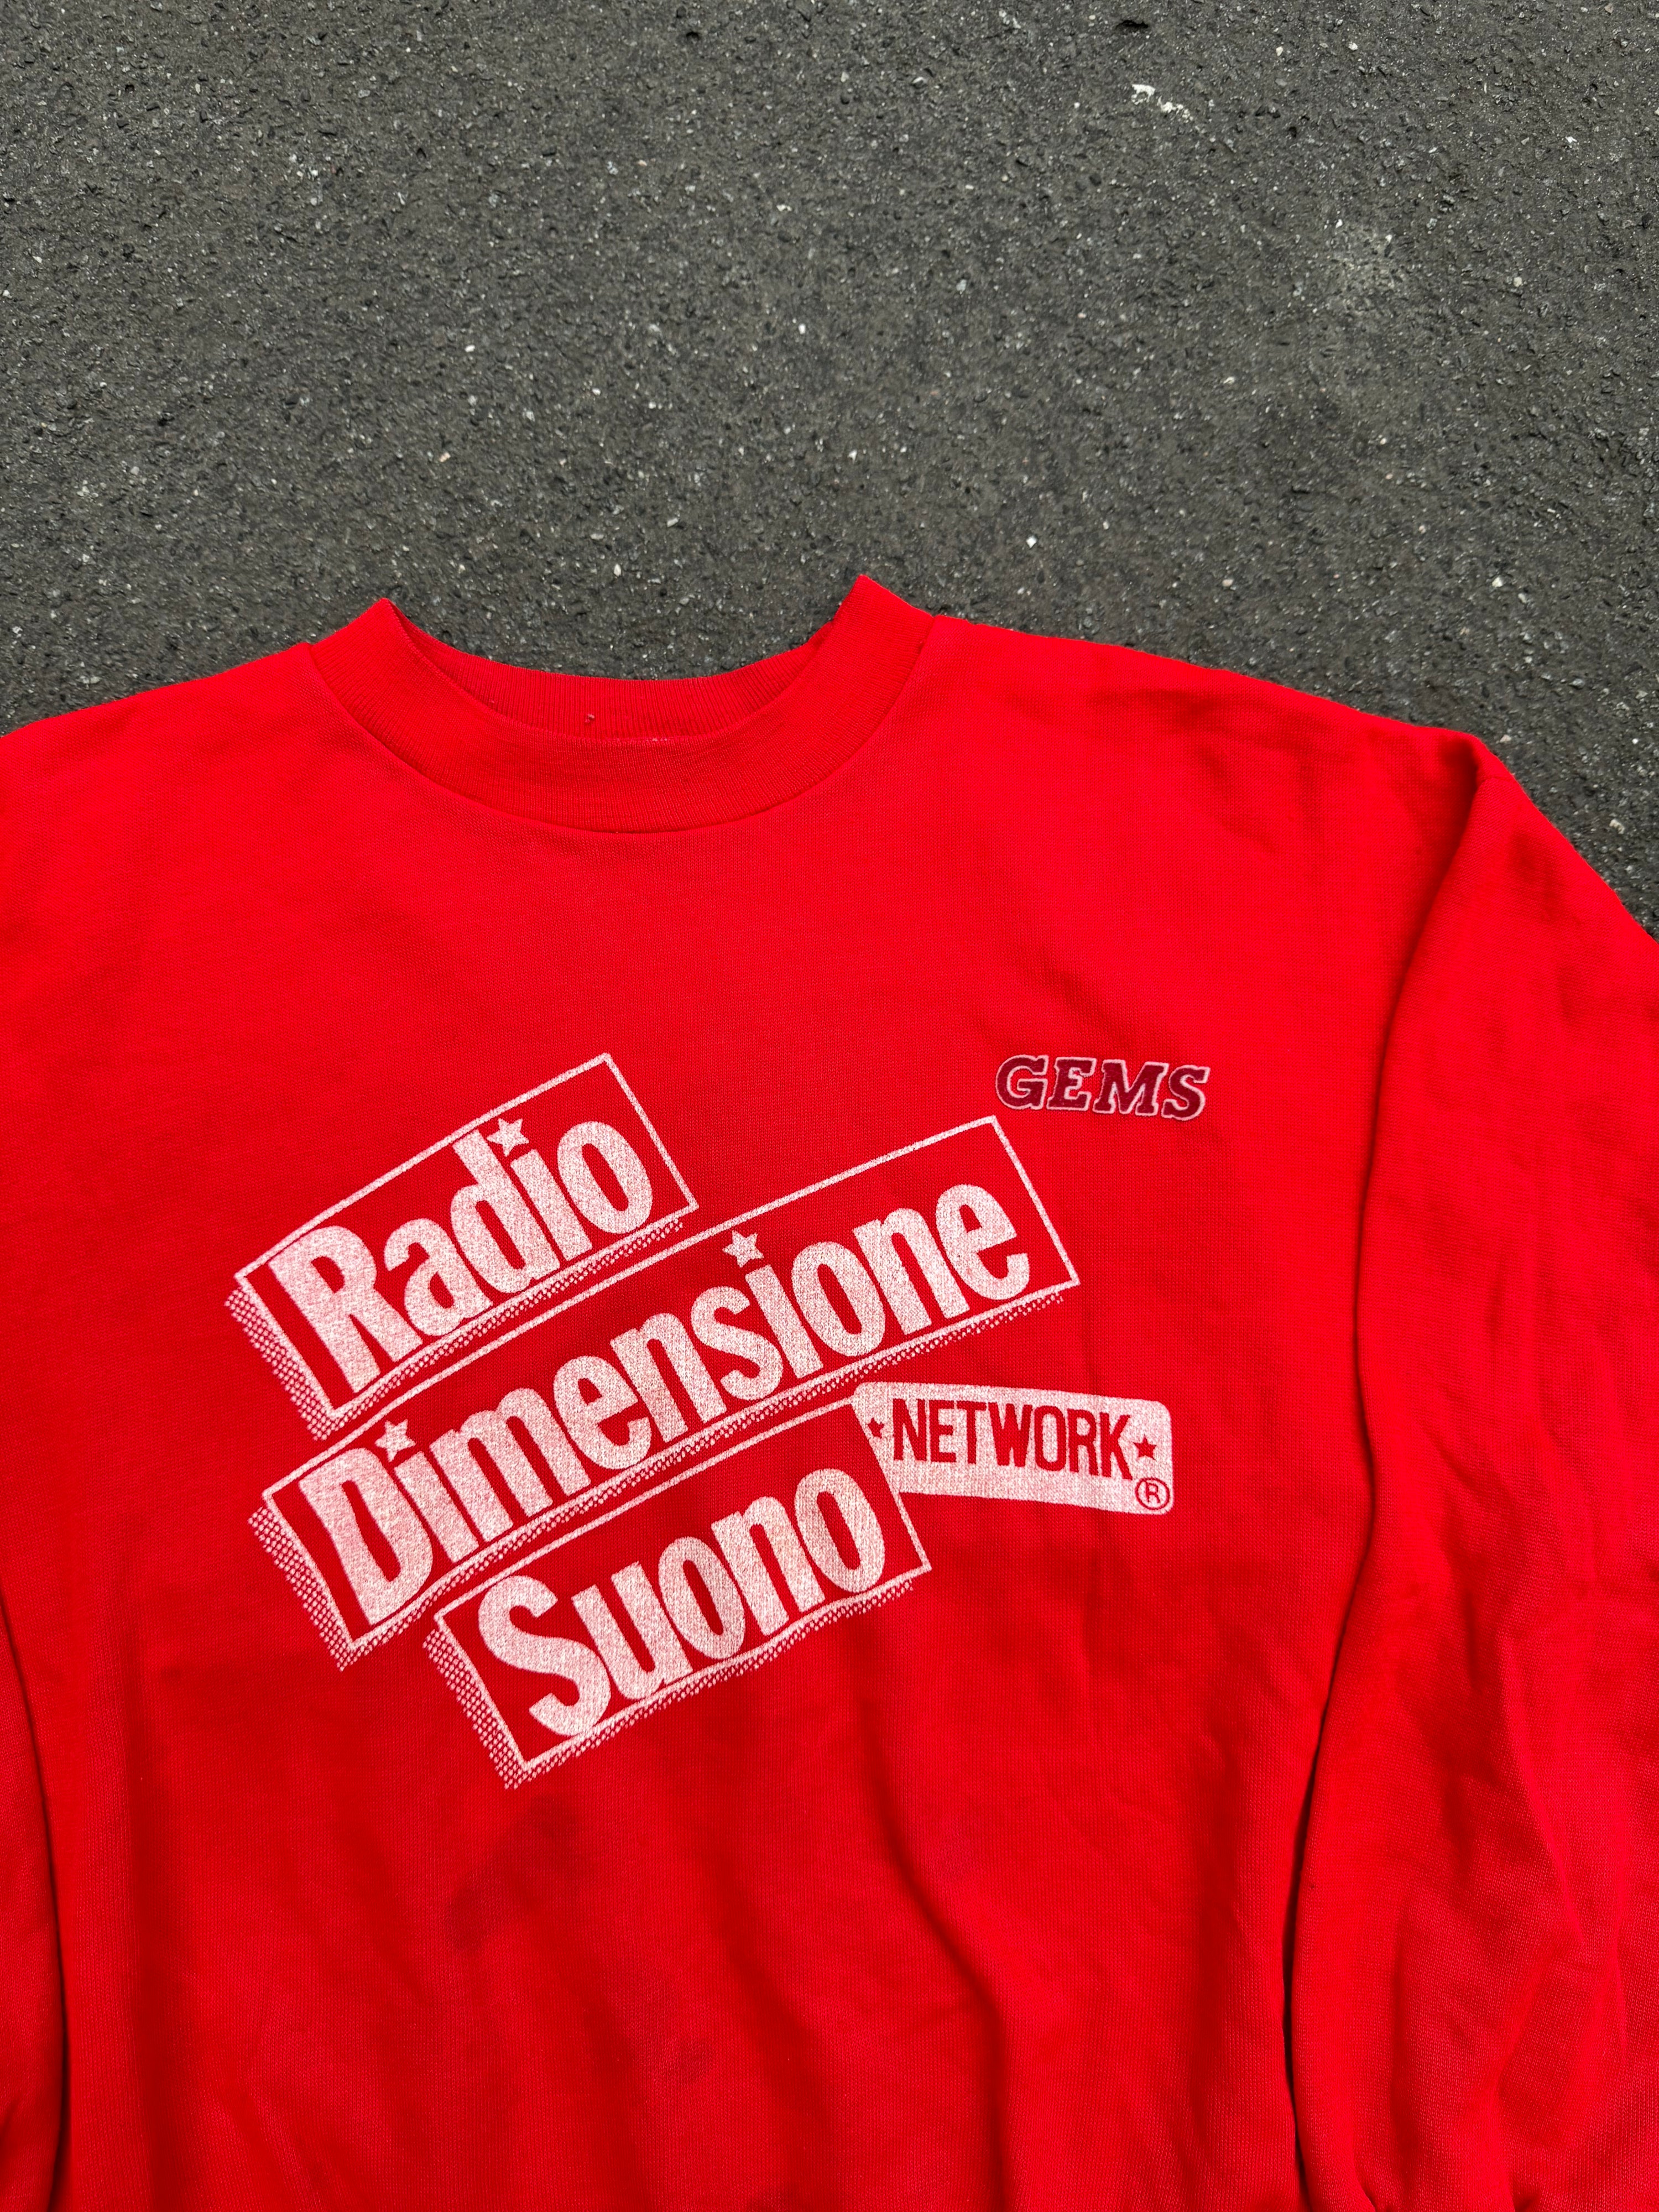 Vintage 90s Gems Radio Dimensione Suono Network Sweater (M)